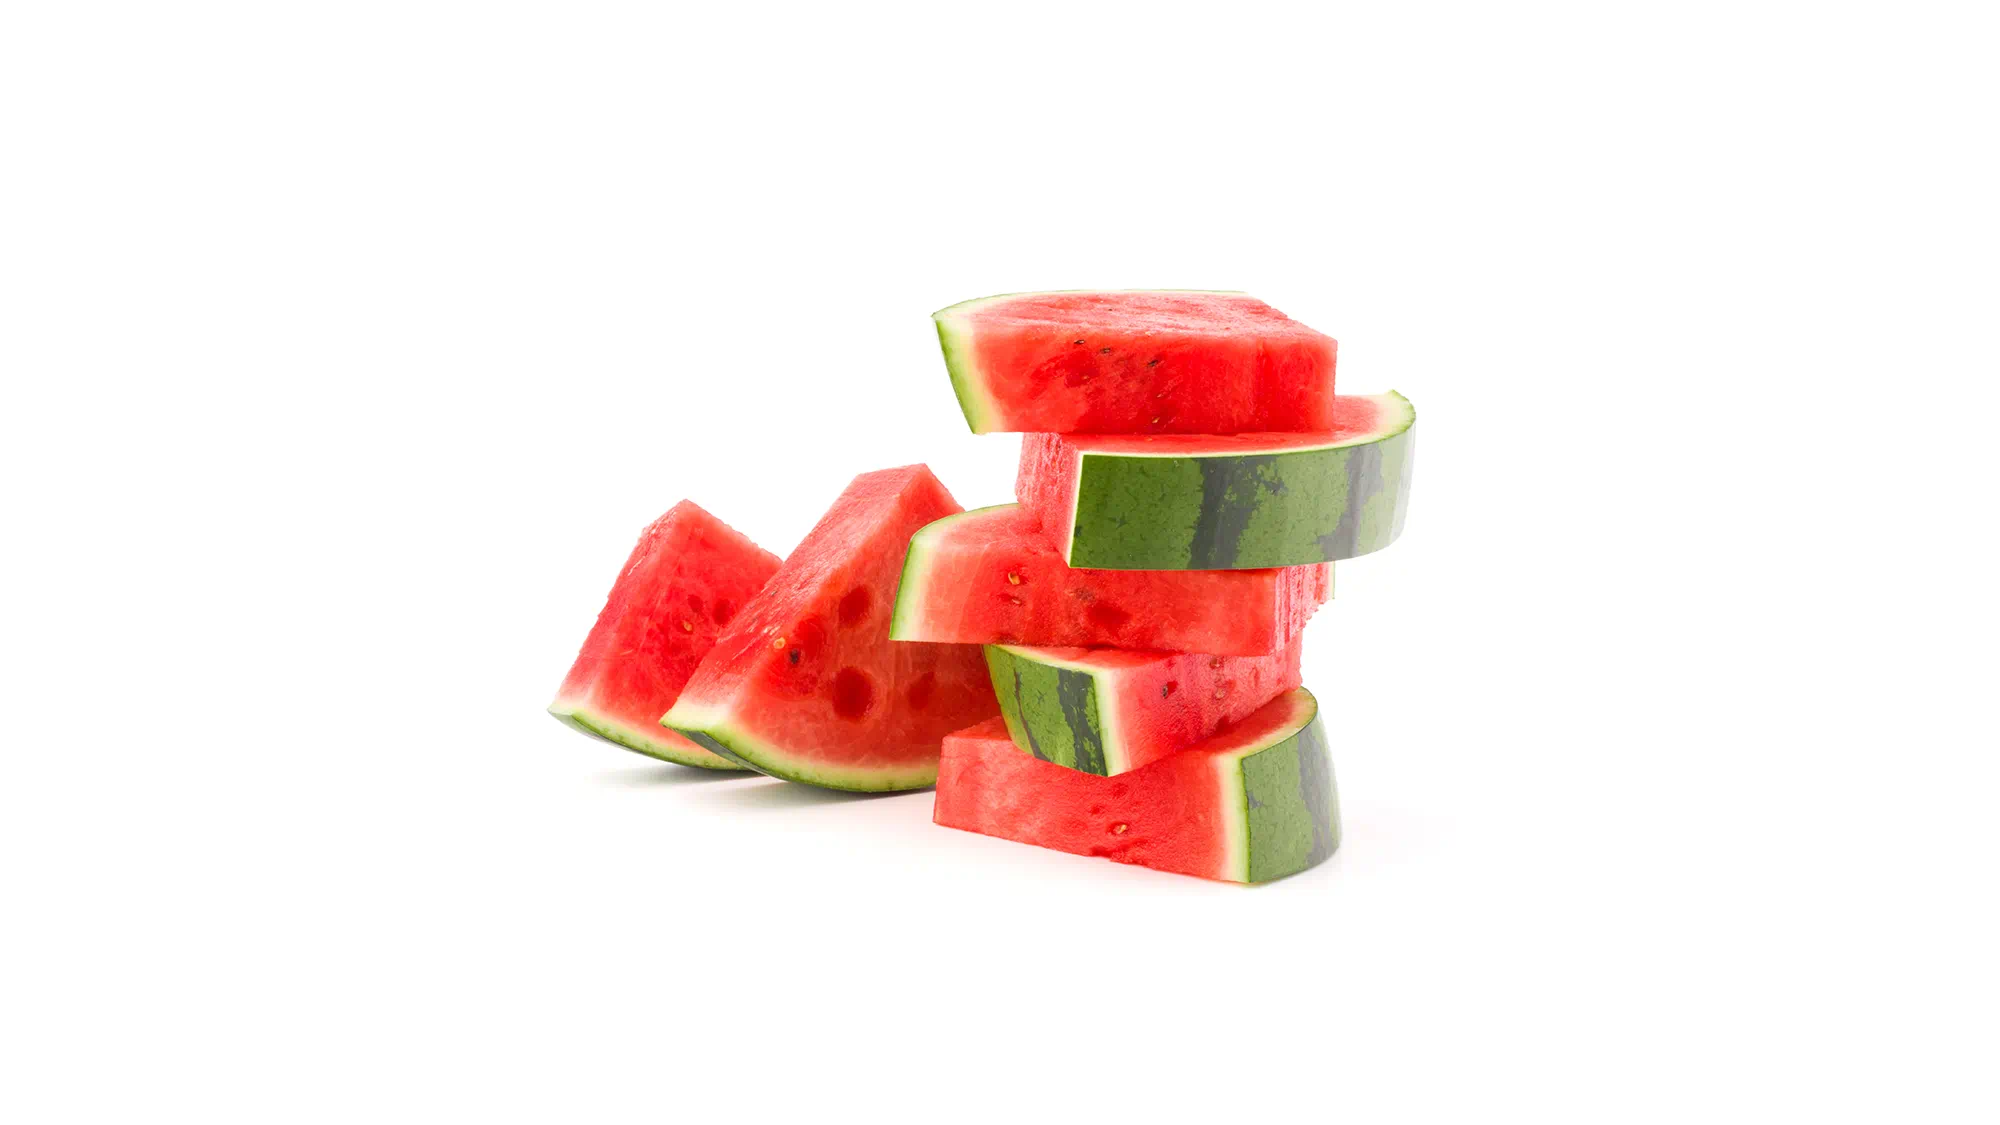 Kruiden bij watermeloen